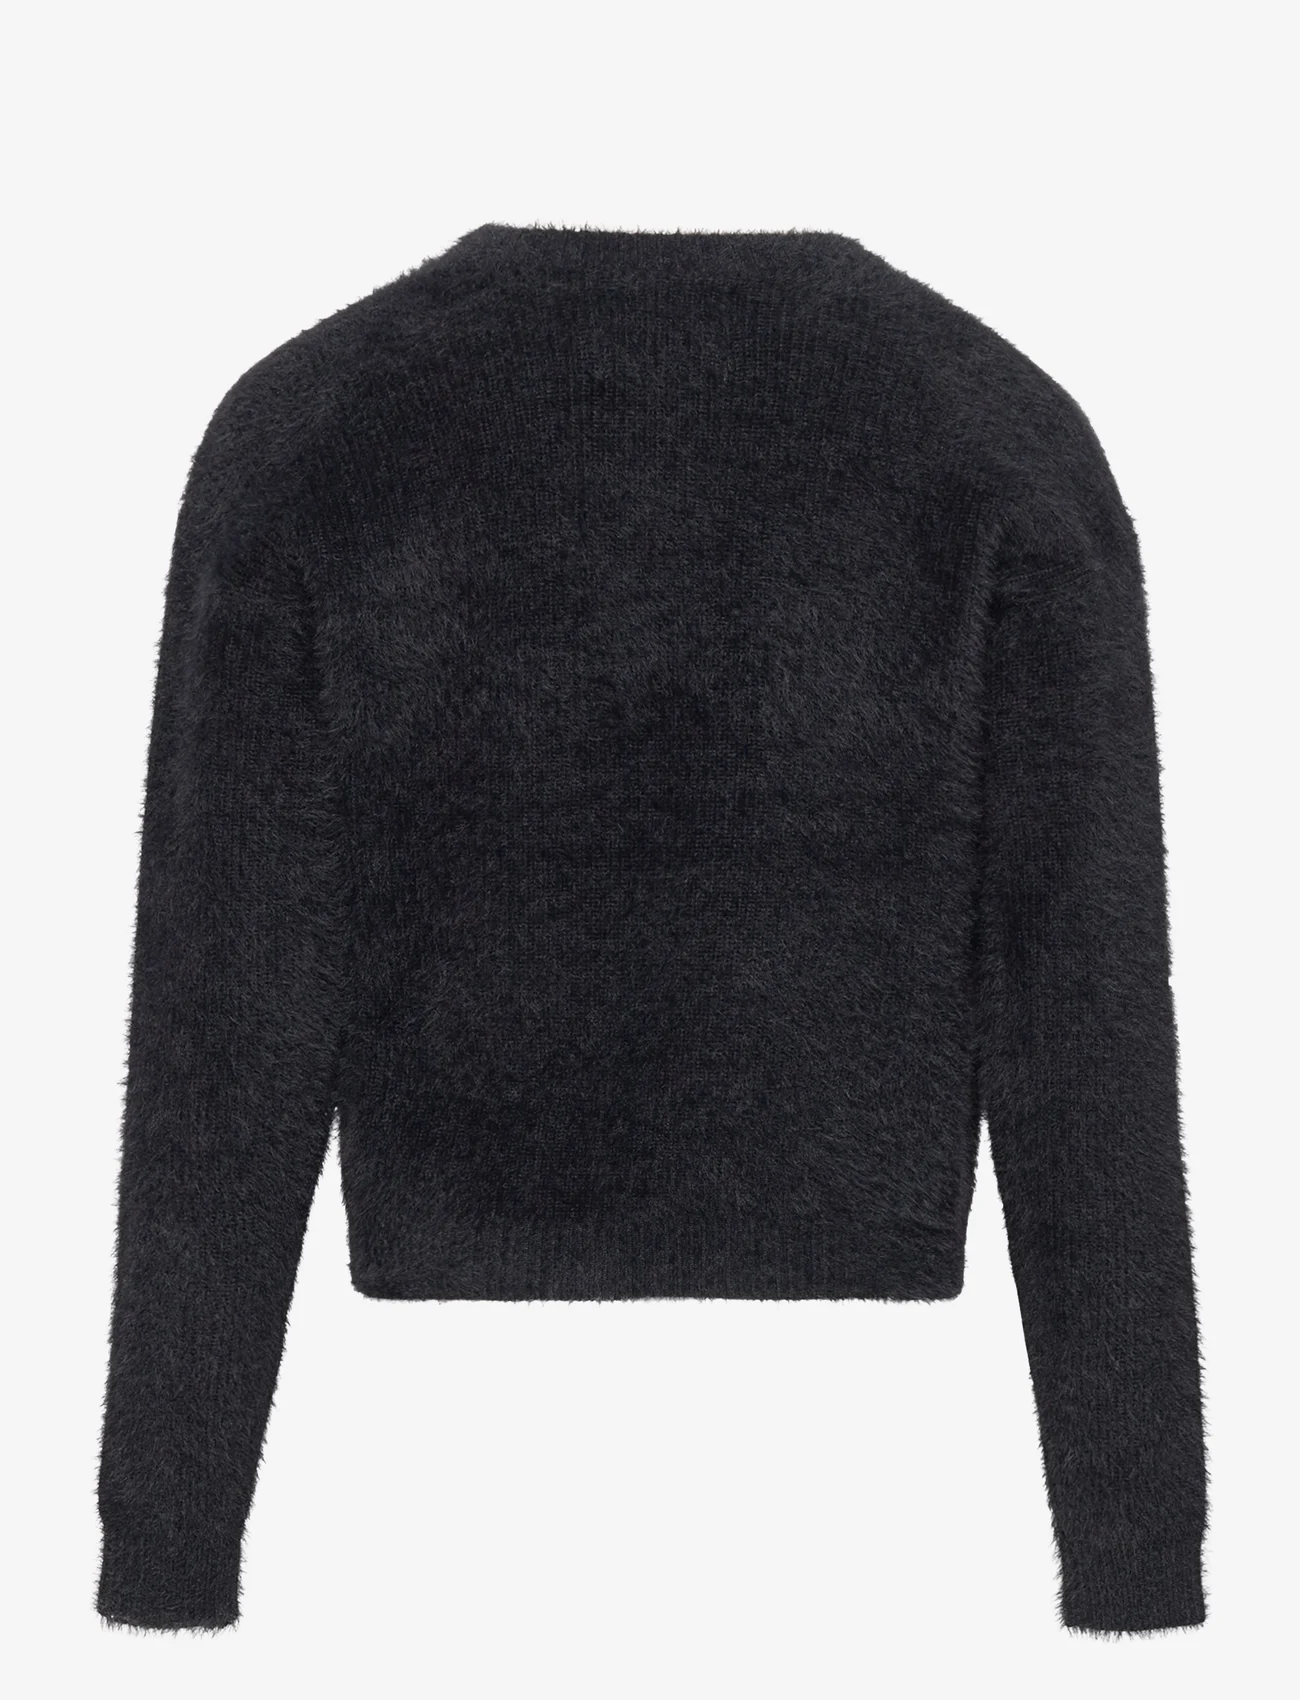 Calvin Klein - MONOGRAM SOFT SWEATER - trøjer - ck black - 1